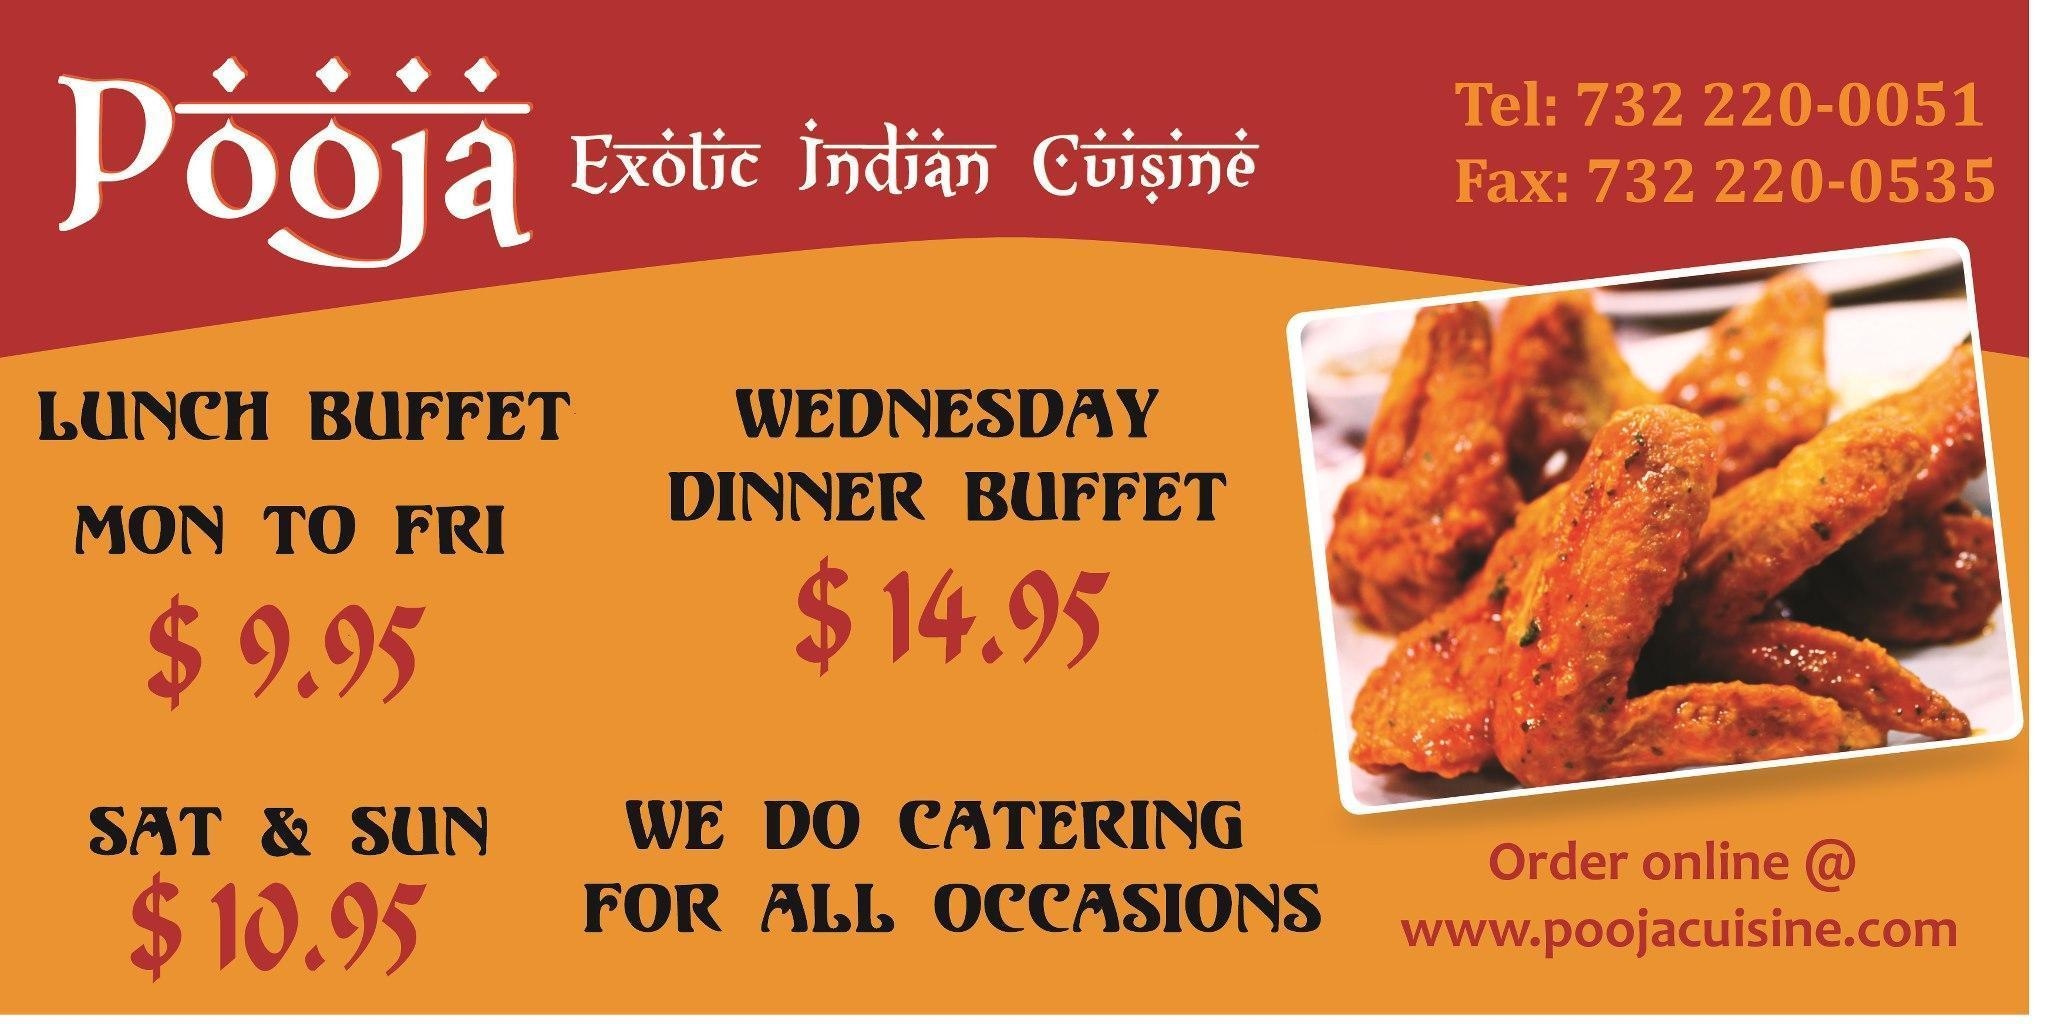 Pooja Exotic Indian Cuisine in Somerset, NJ 08873 - ChamberofCommerce.com